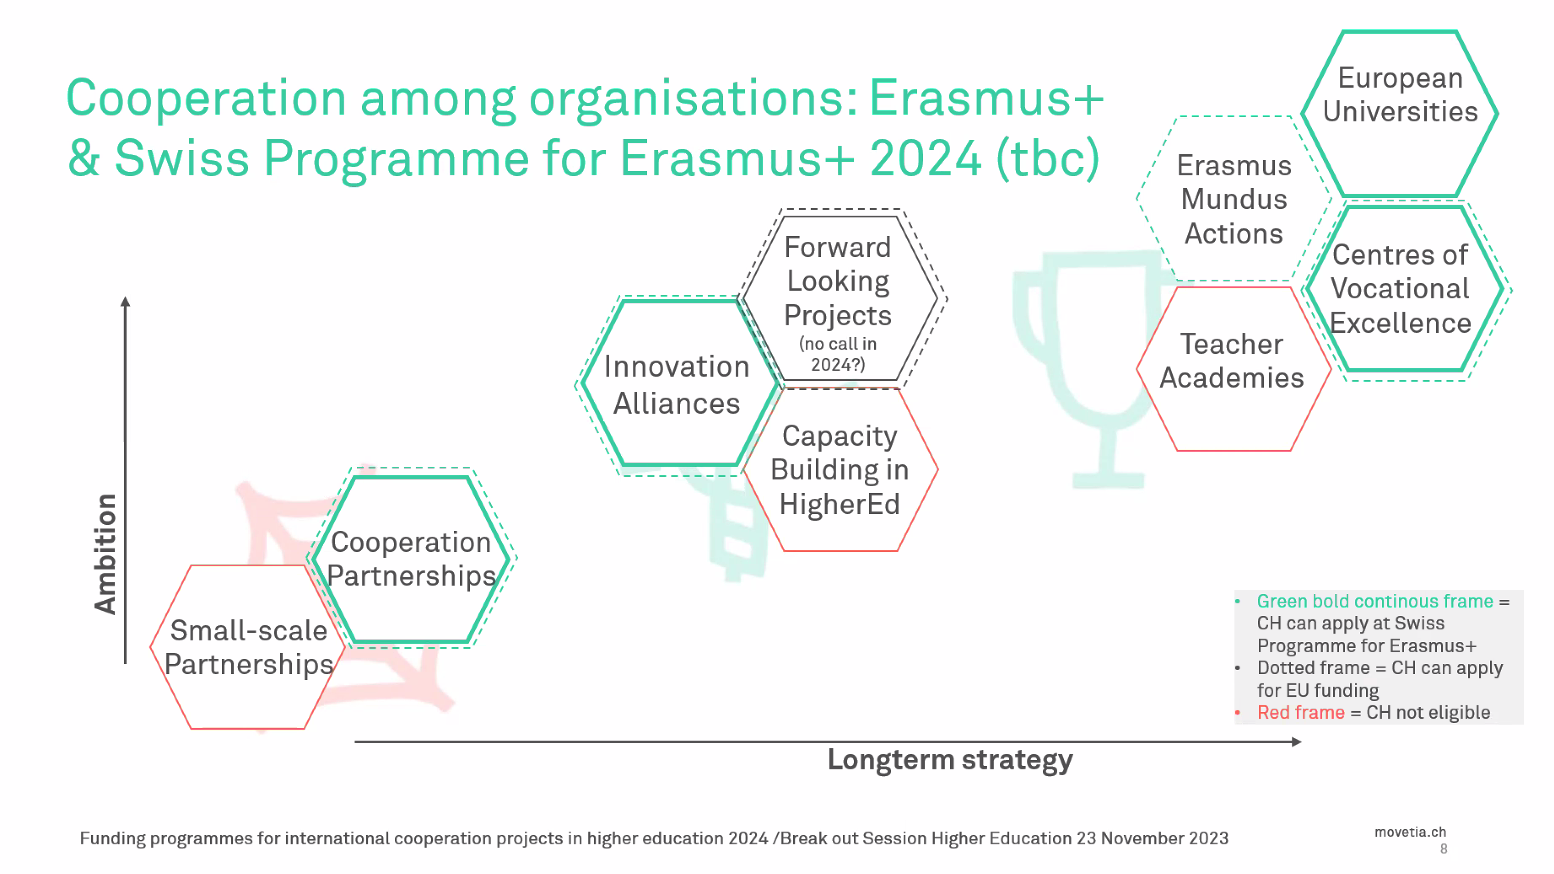 Funding Areas within Erasmus+ (Image: Movetia)